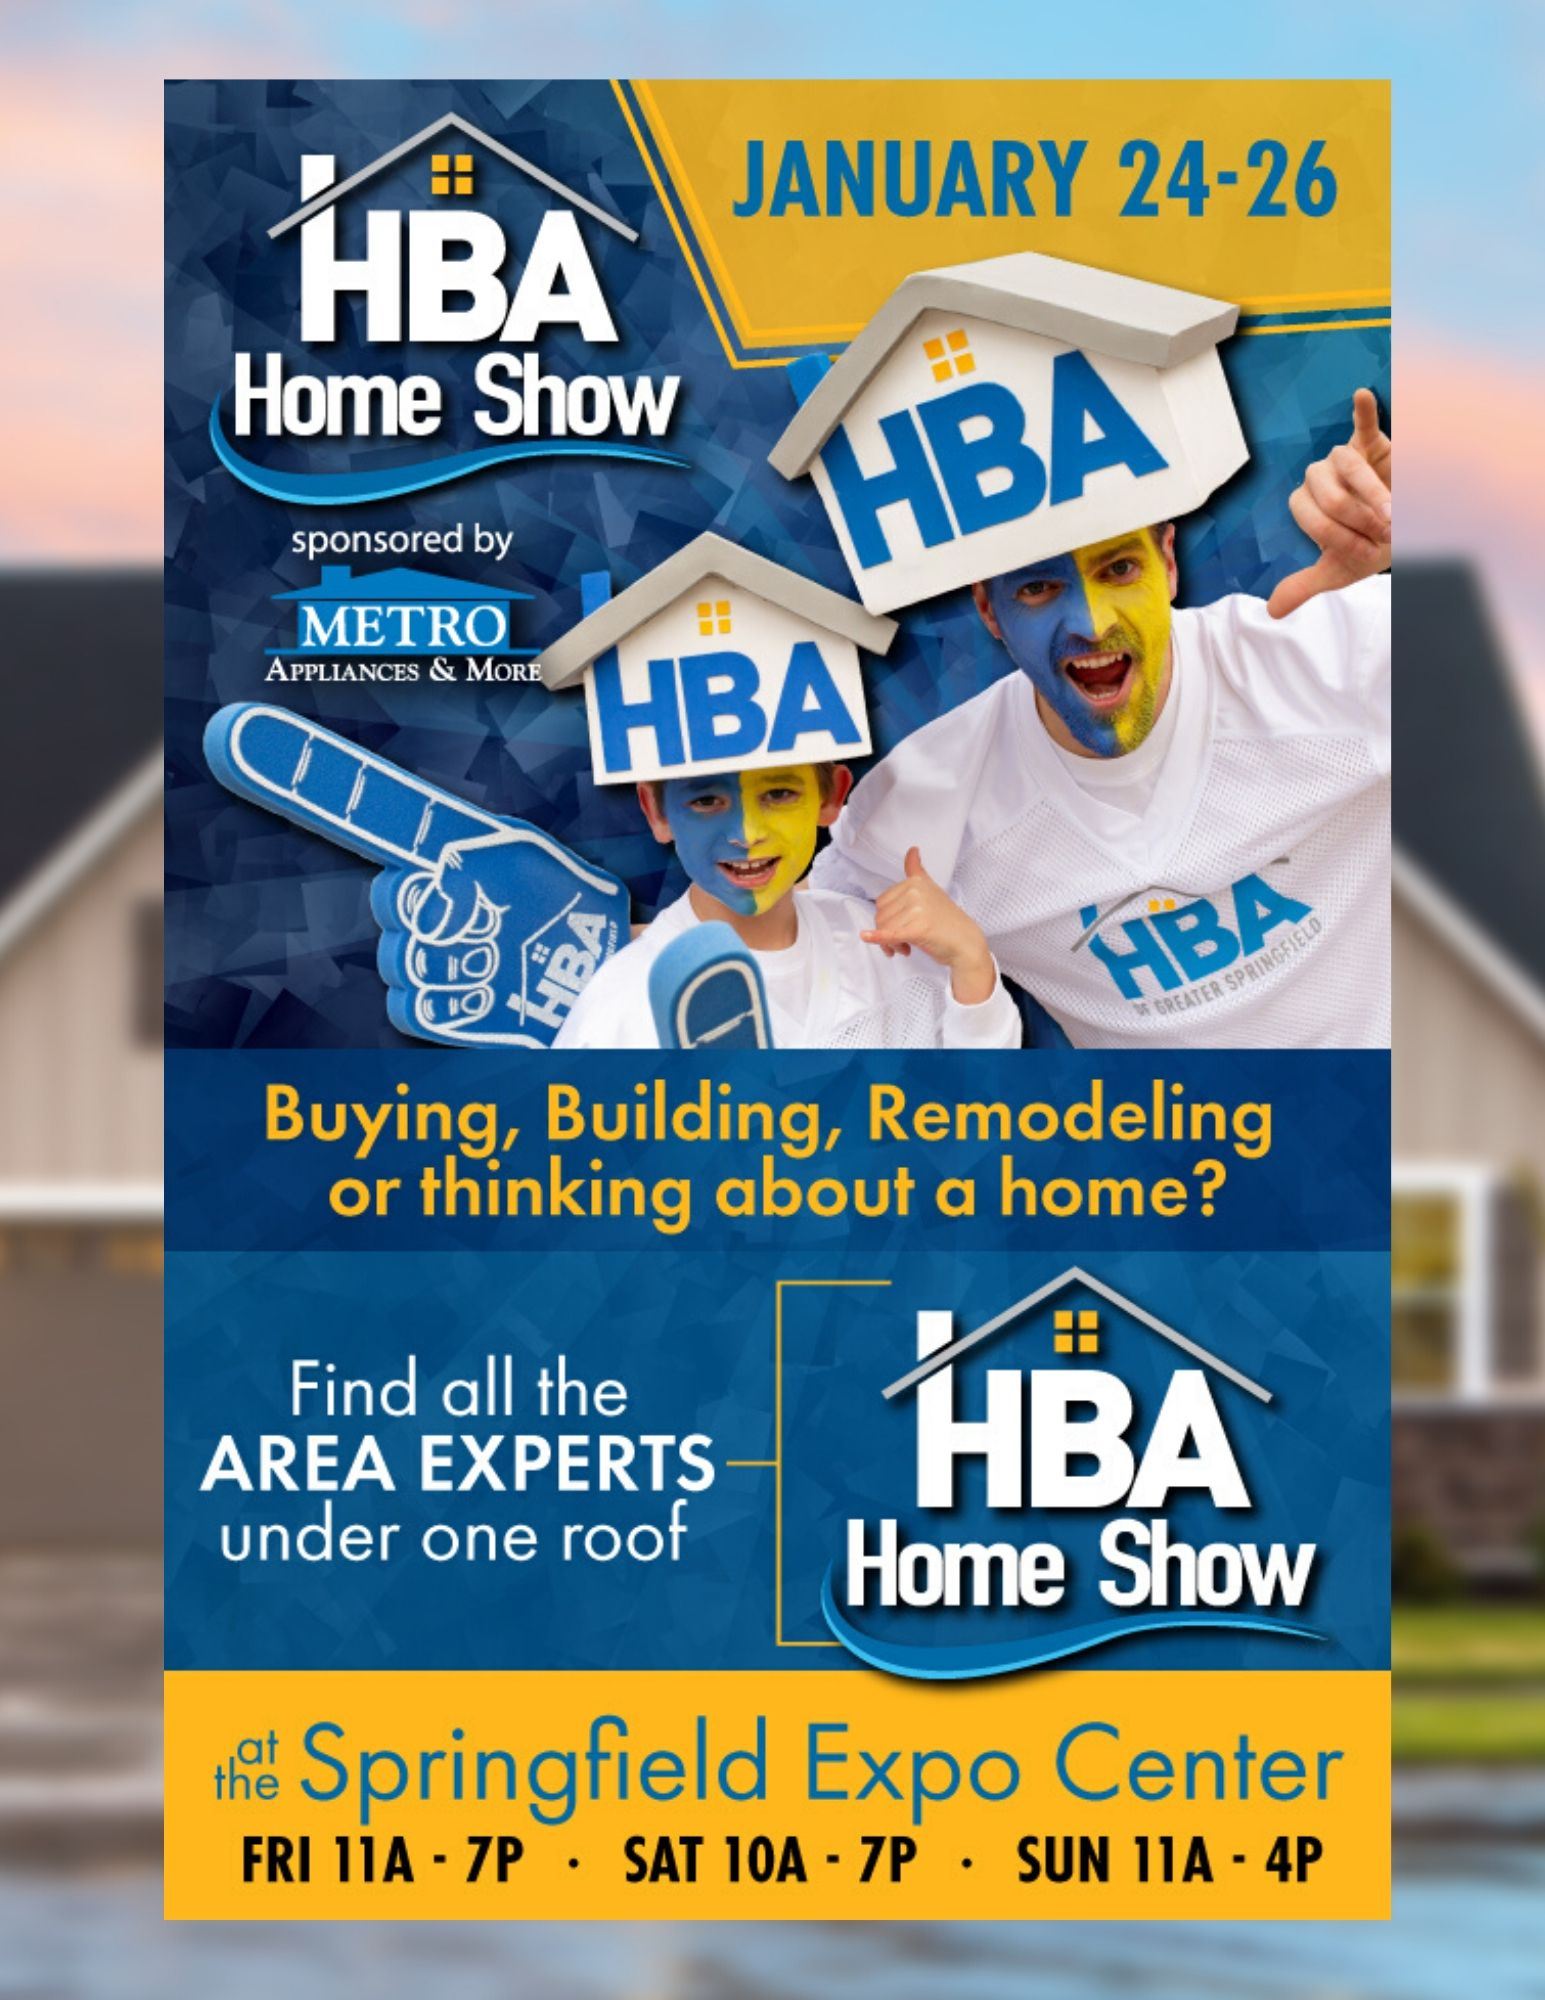 HBA Home Show Image